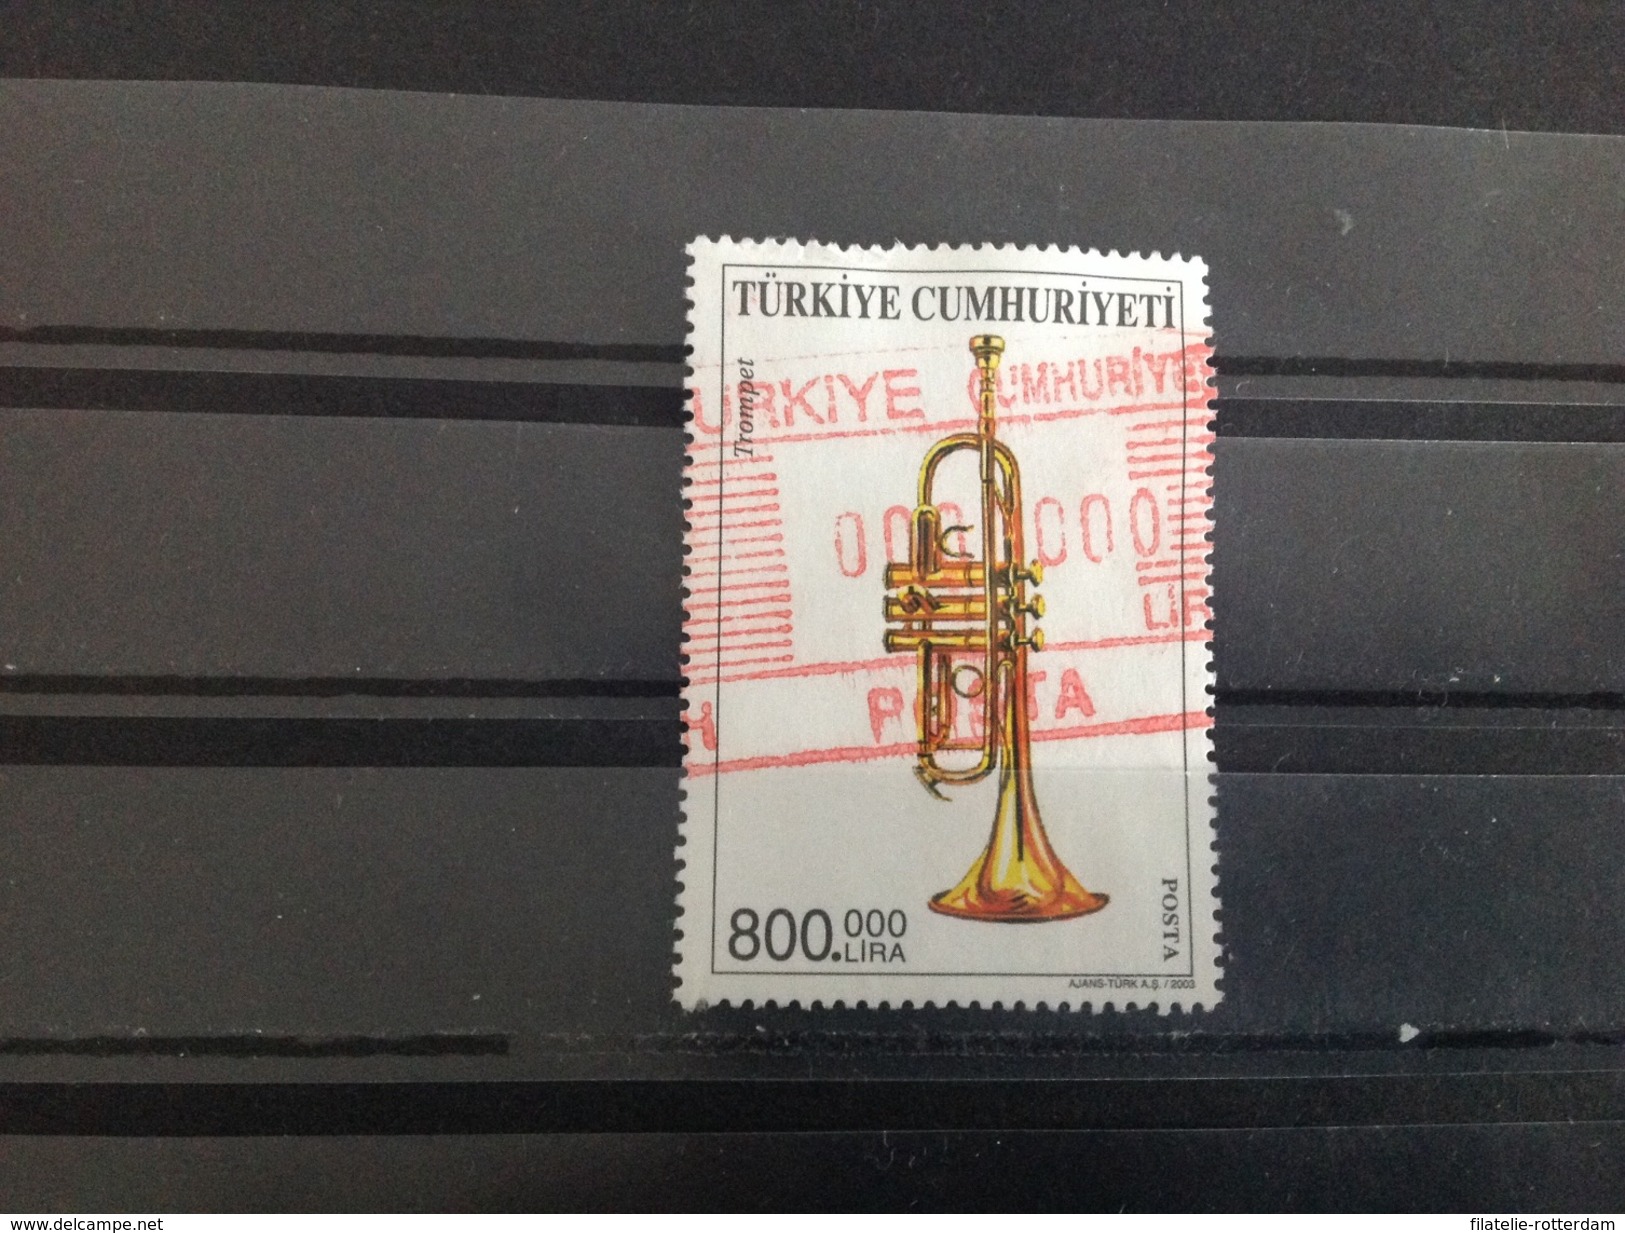 Turkije / Turkey - Trompet (800000) 2003 - Oblitérés